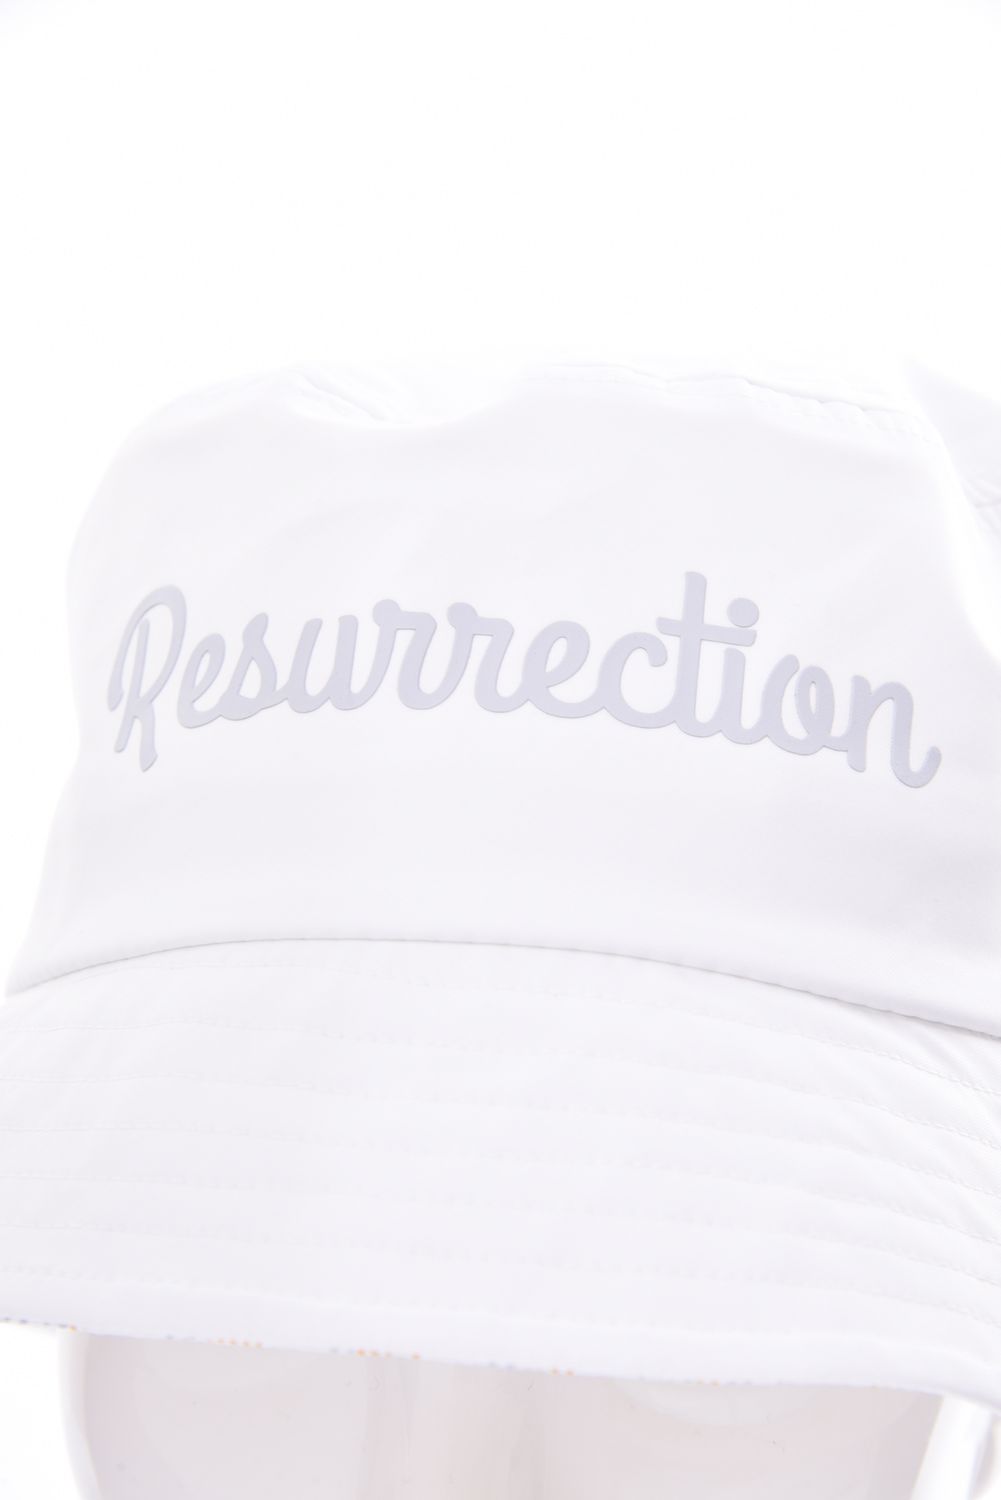 Resurrection - RAIN BUCKET HAT / ブランド オリジナルテキスタイル 